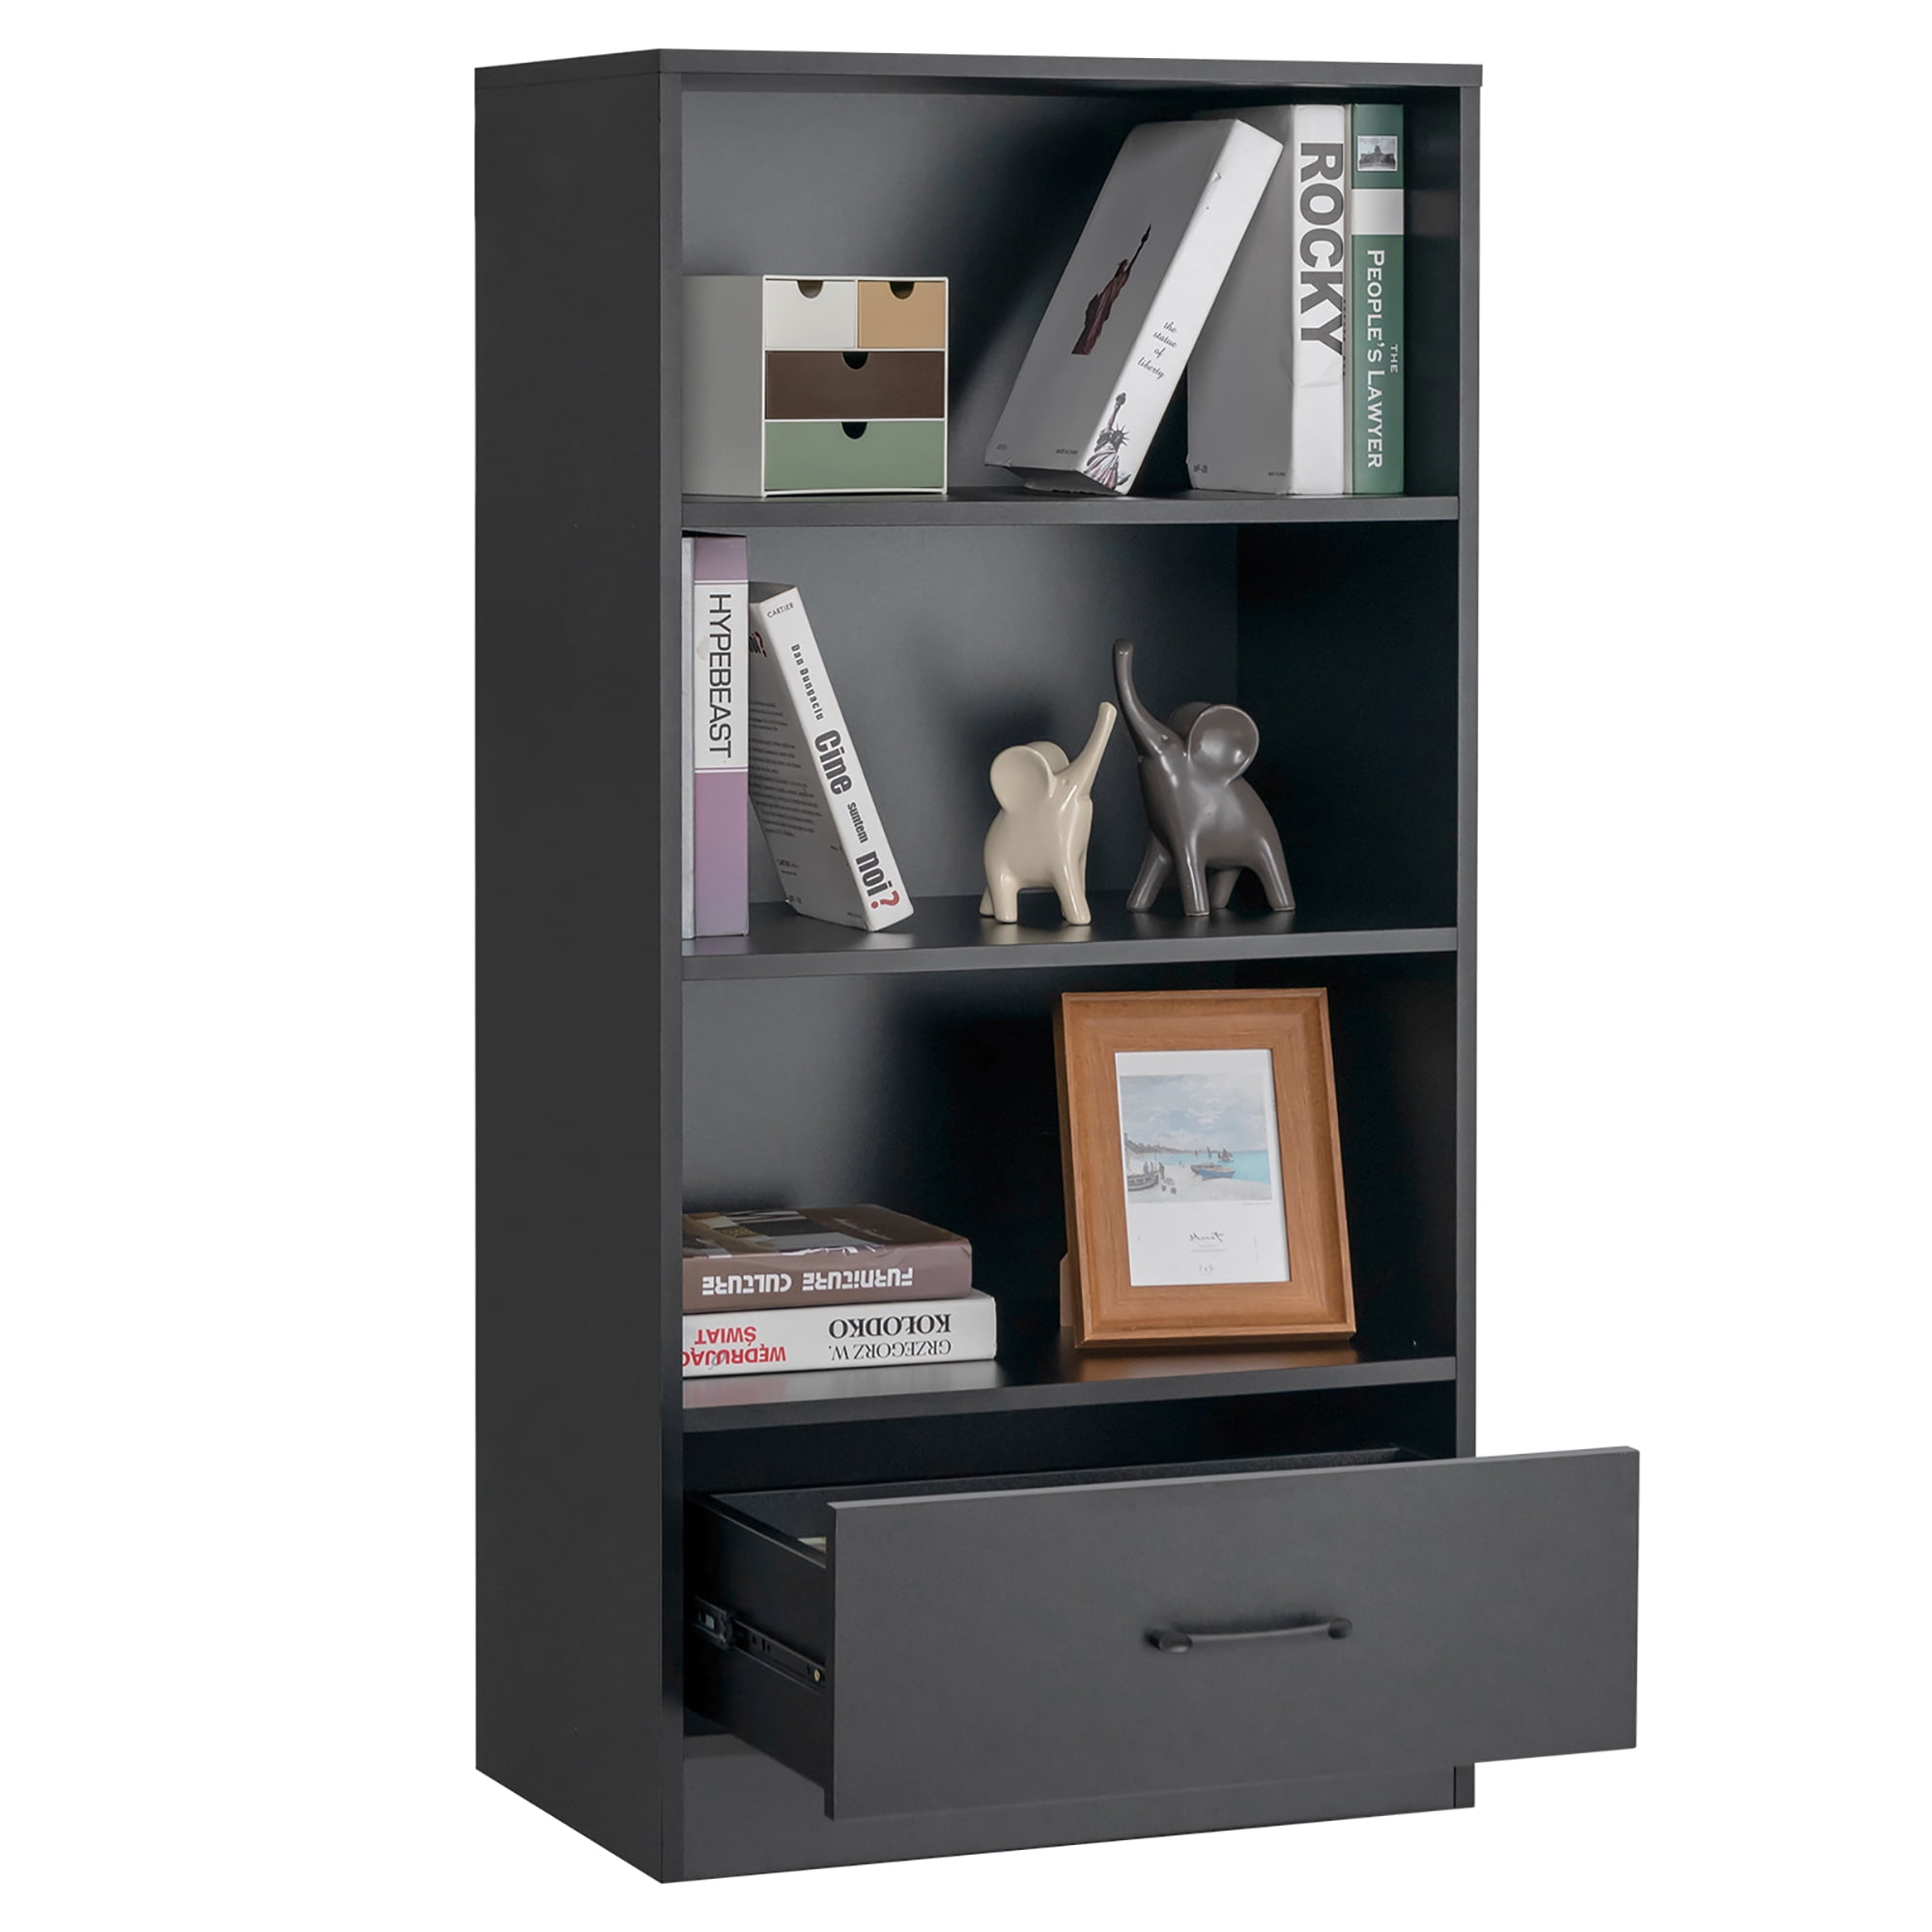 Dropship 46 Tall Adjustable 4-Shelf Wood Bookcase Storage